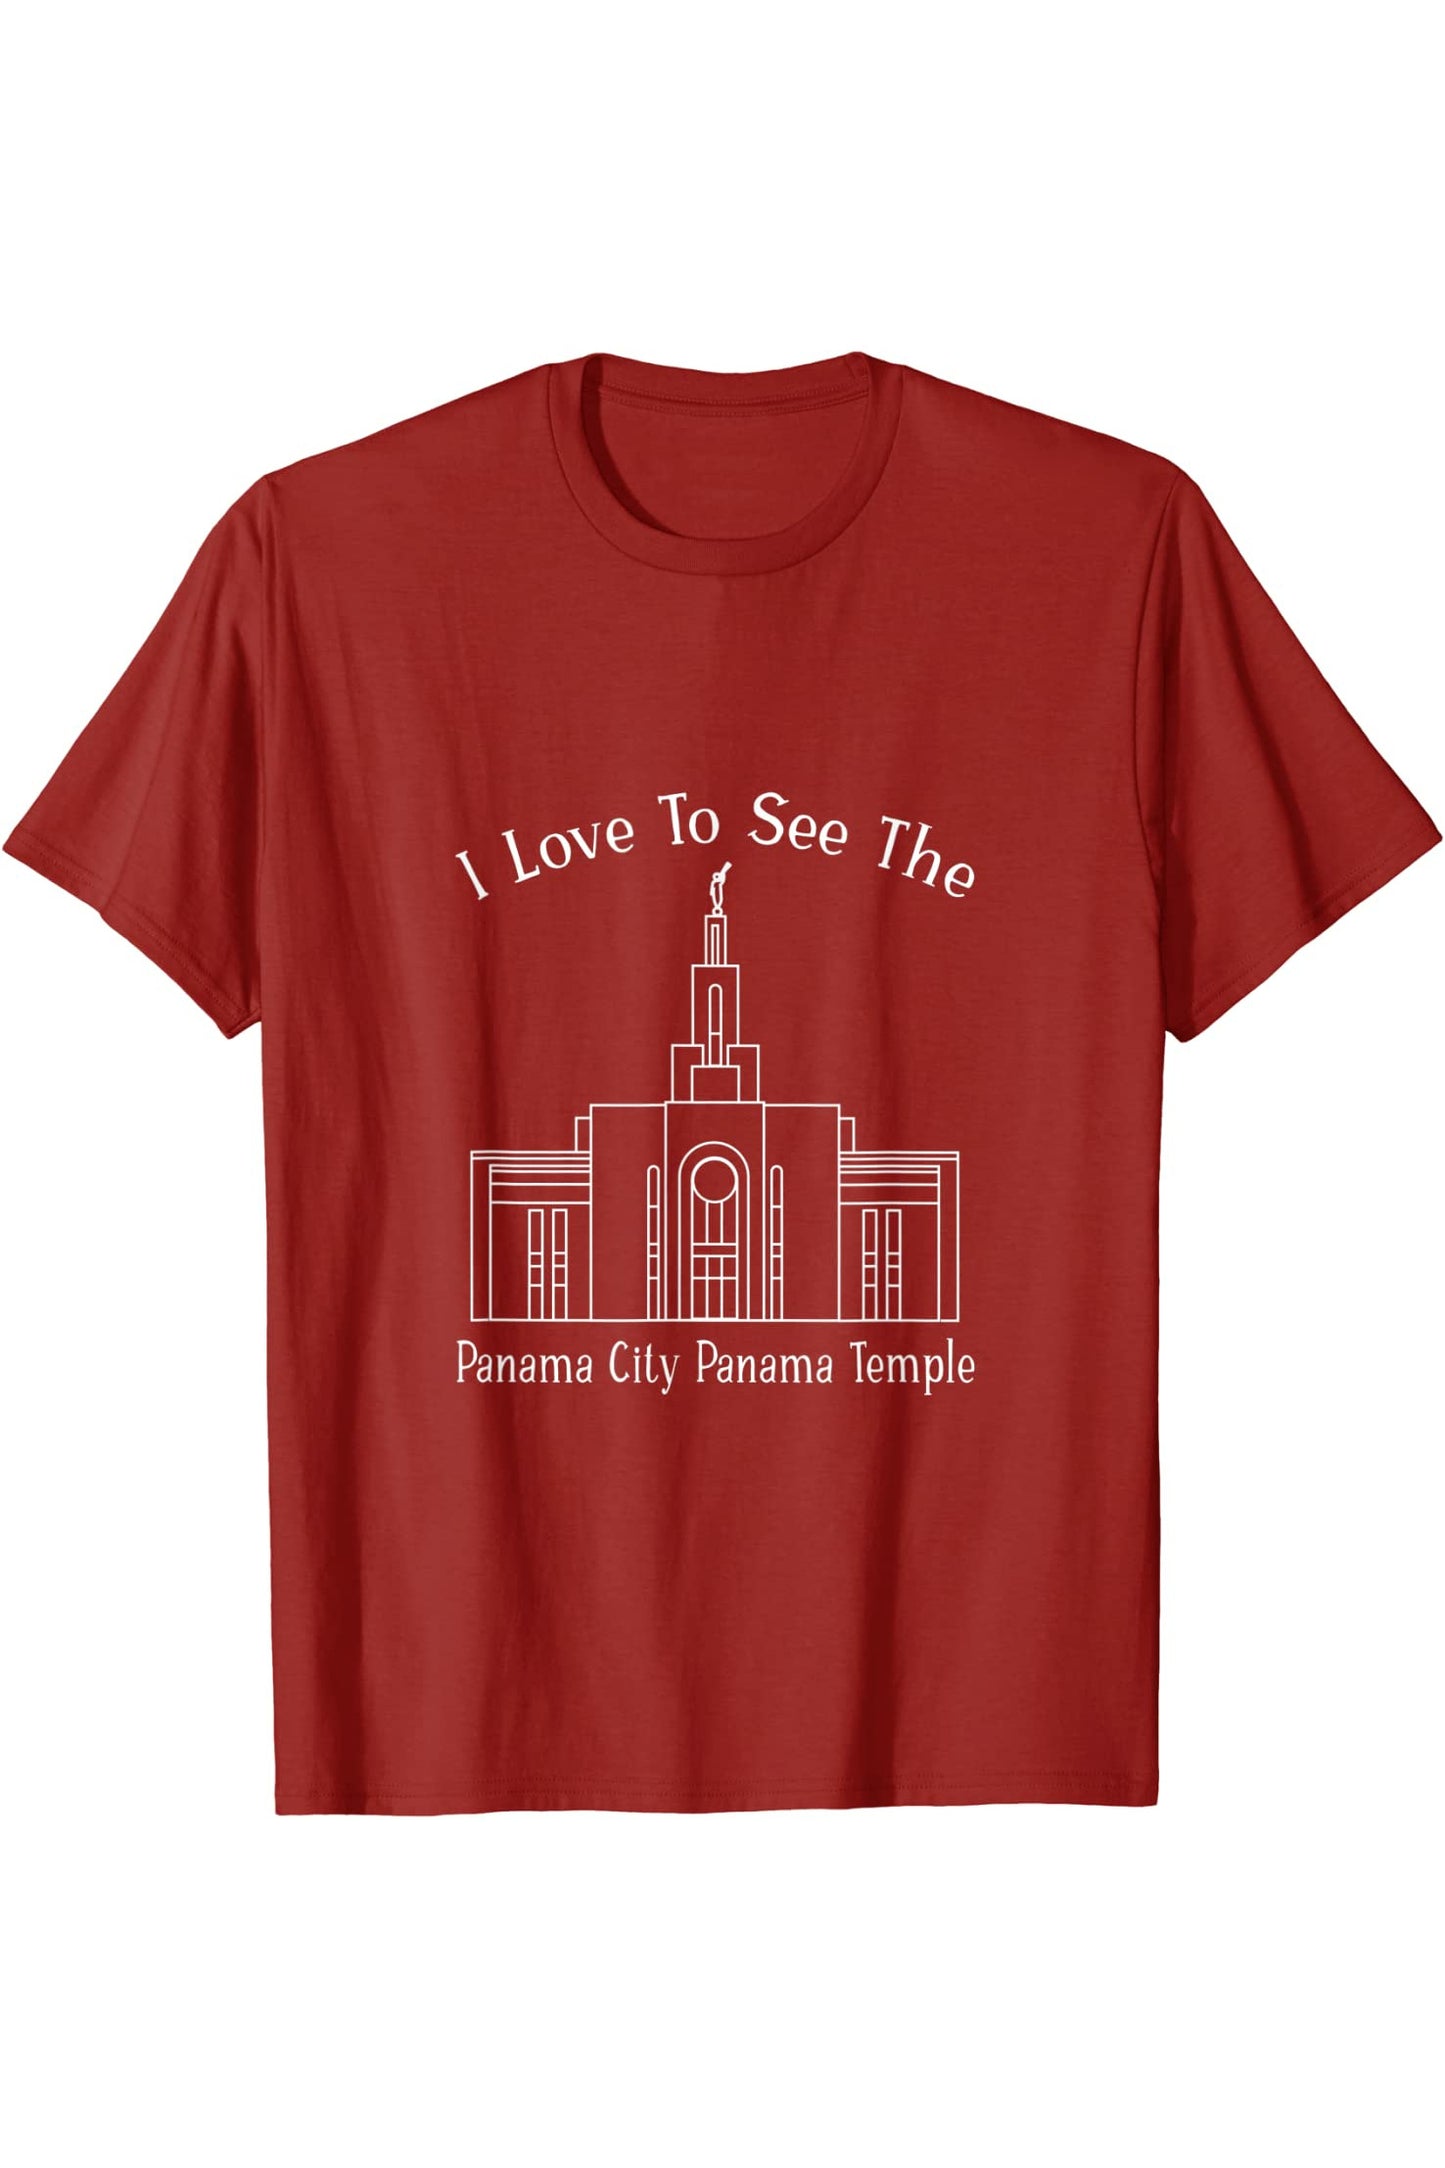 Panama City Panama Temple T-Shirt - Happy Style (English) US